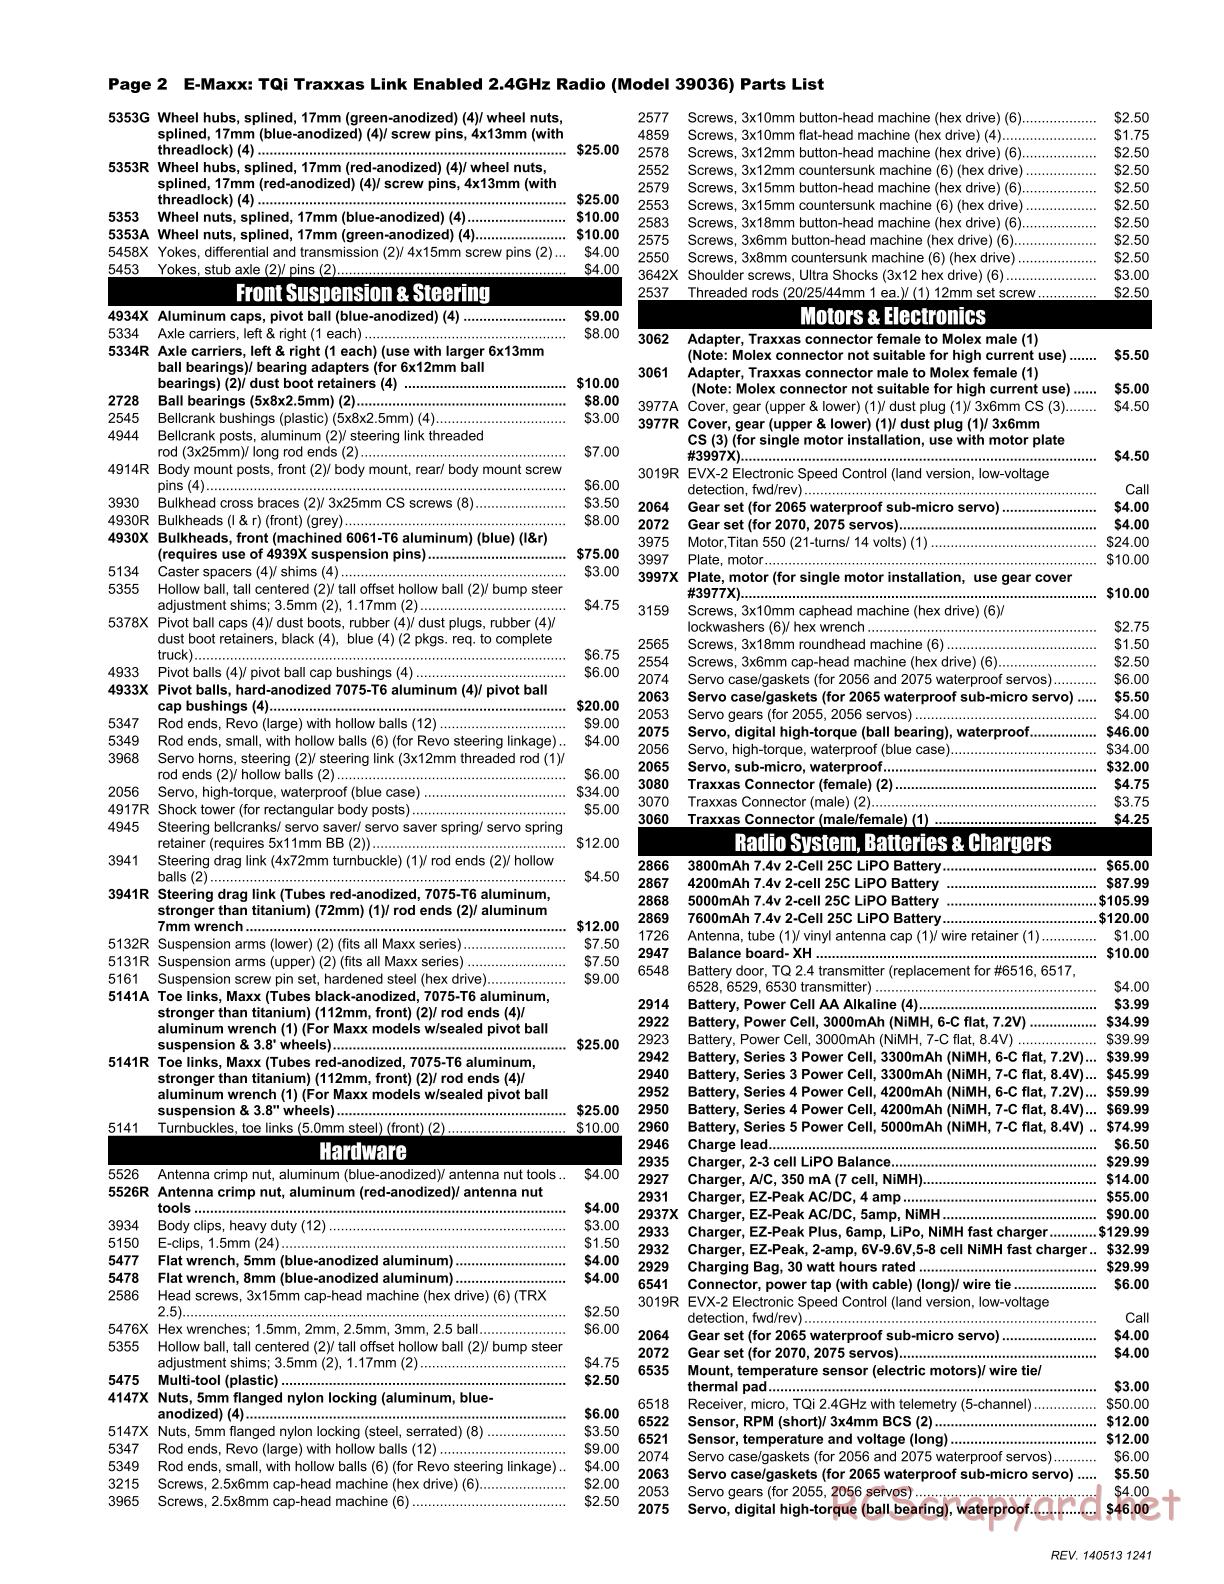 Traxxas - E-Maxx (2014) - Parts List - Page 2